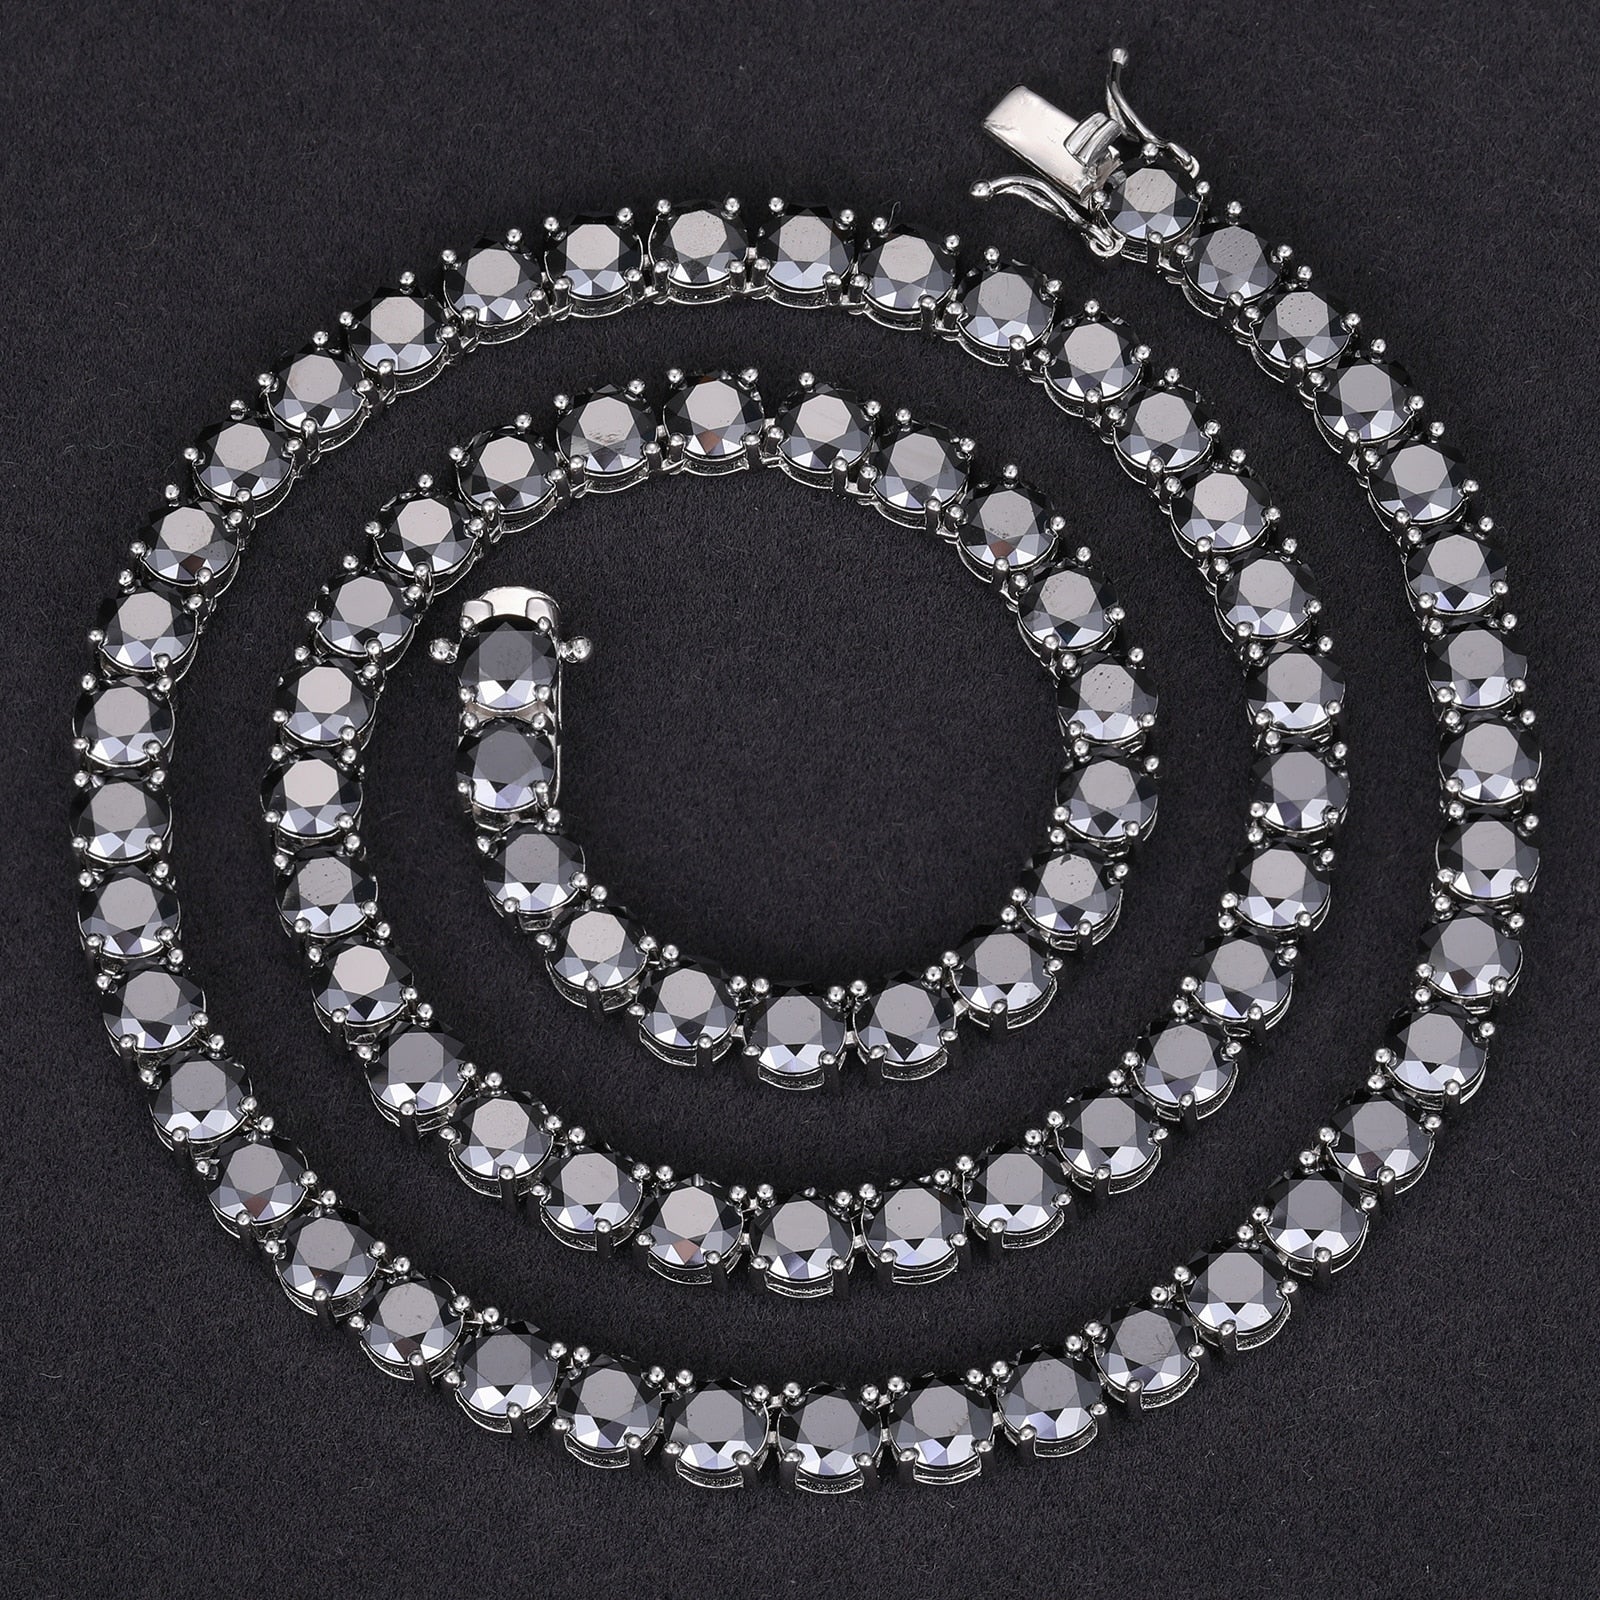 Black Diamond Necklace | Black Diamond Bracelet | Real Diamond Tennis Chain